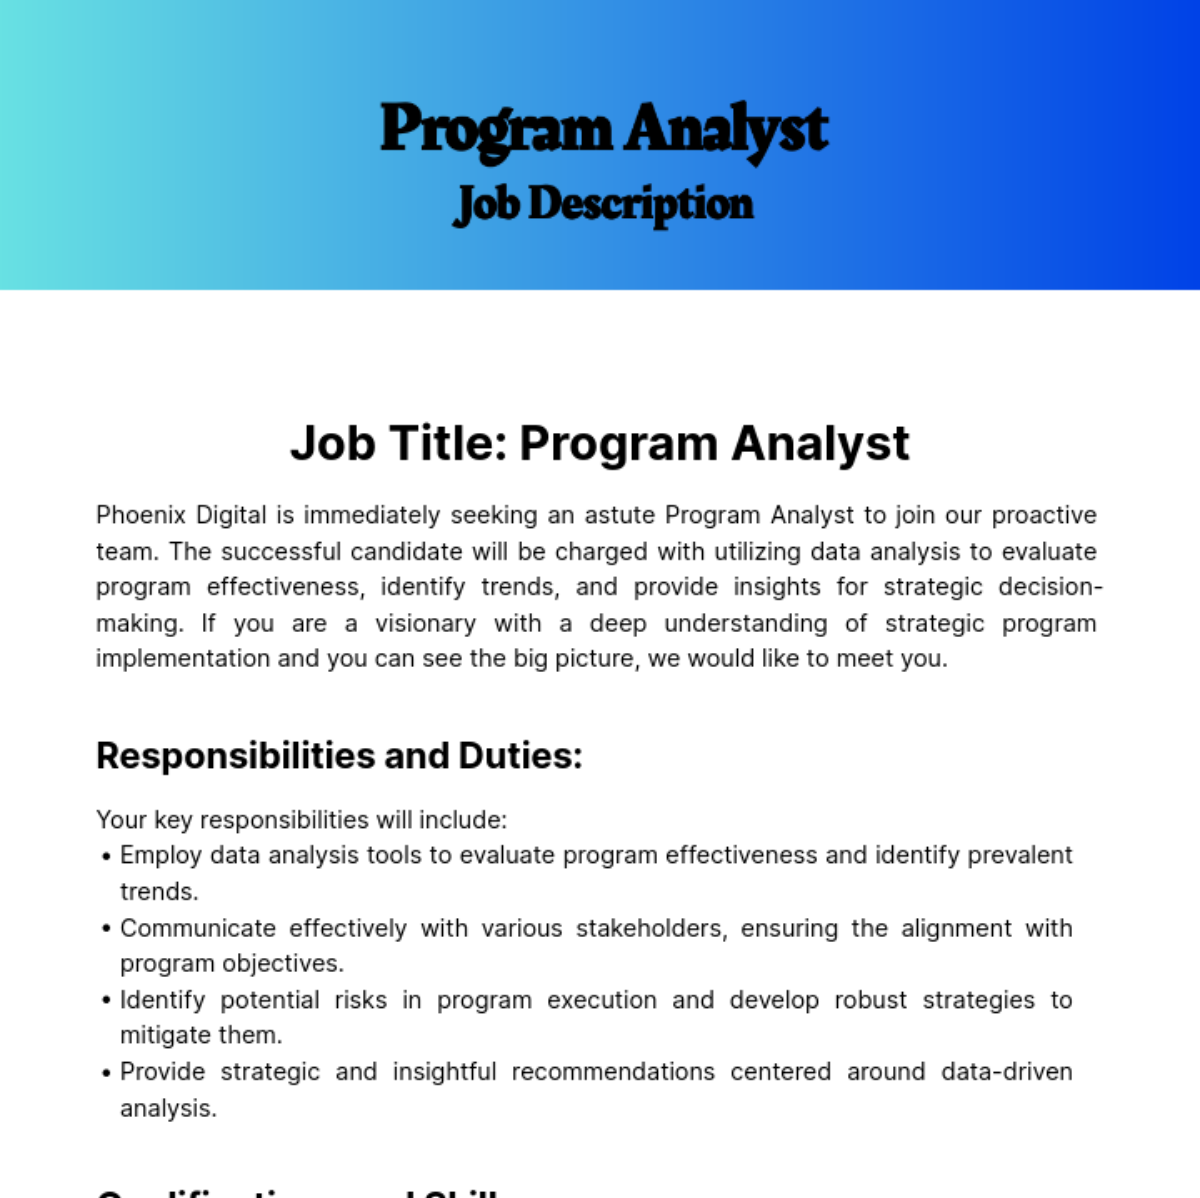 Program Analyst Job Description Template